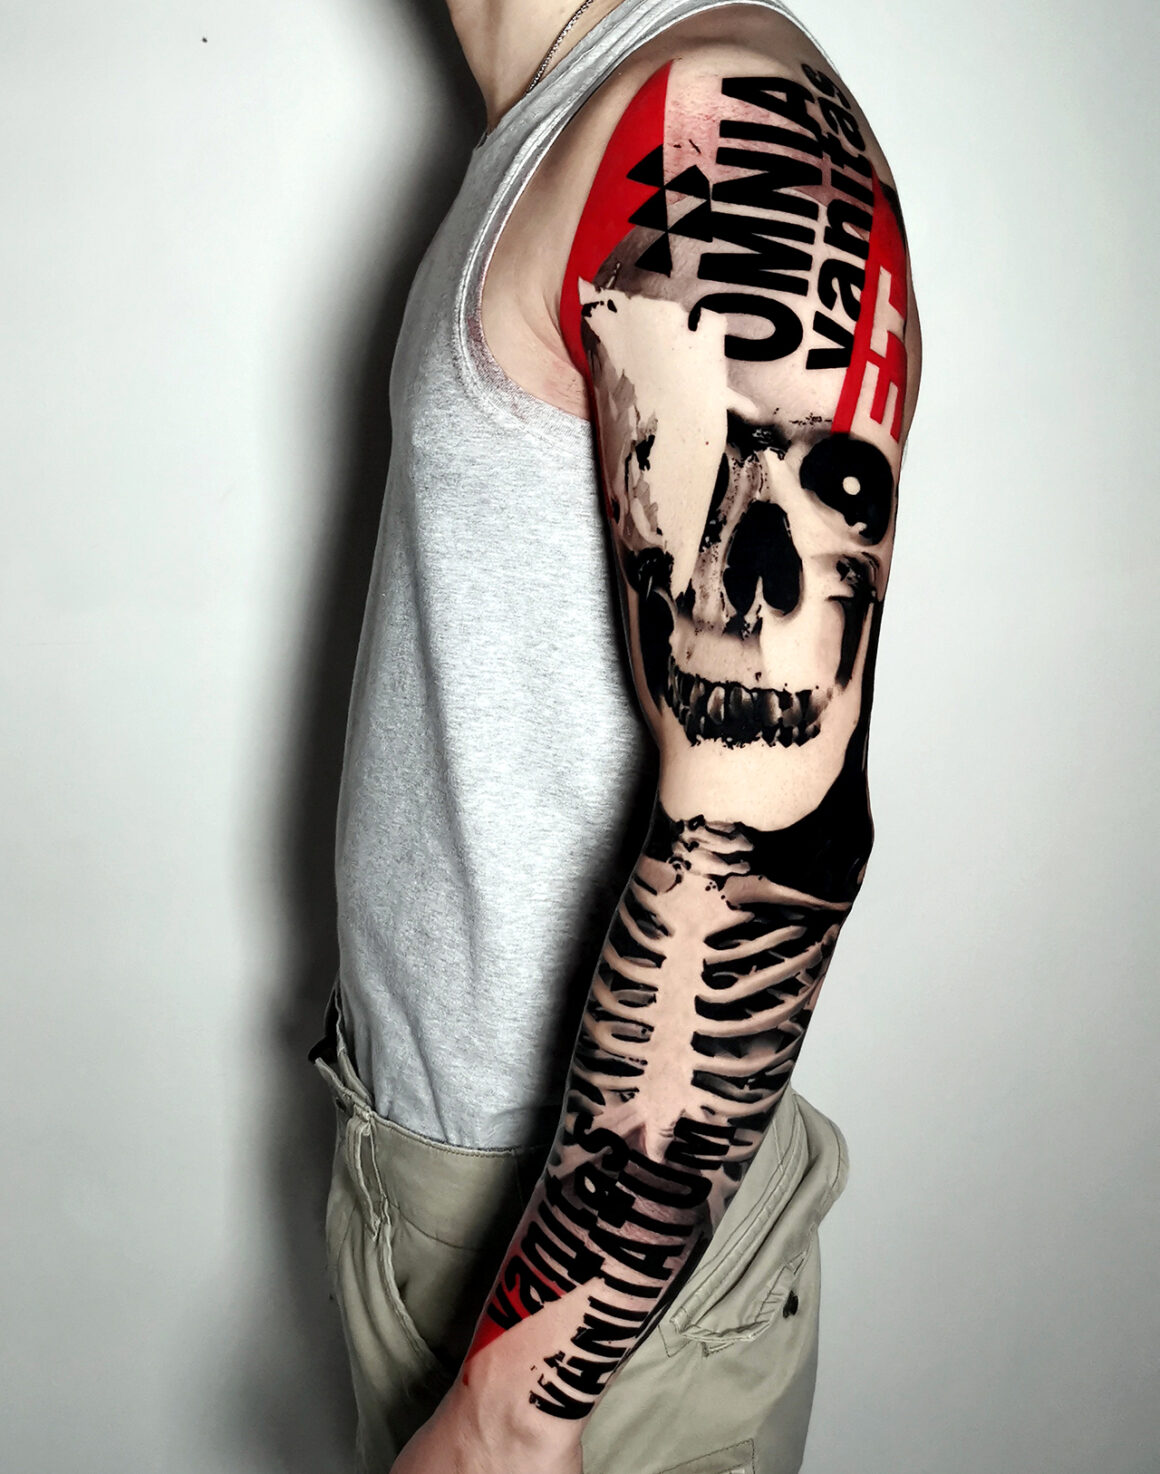 Tattoo by Stefano Galati, @stefanogalaty_royaleink